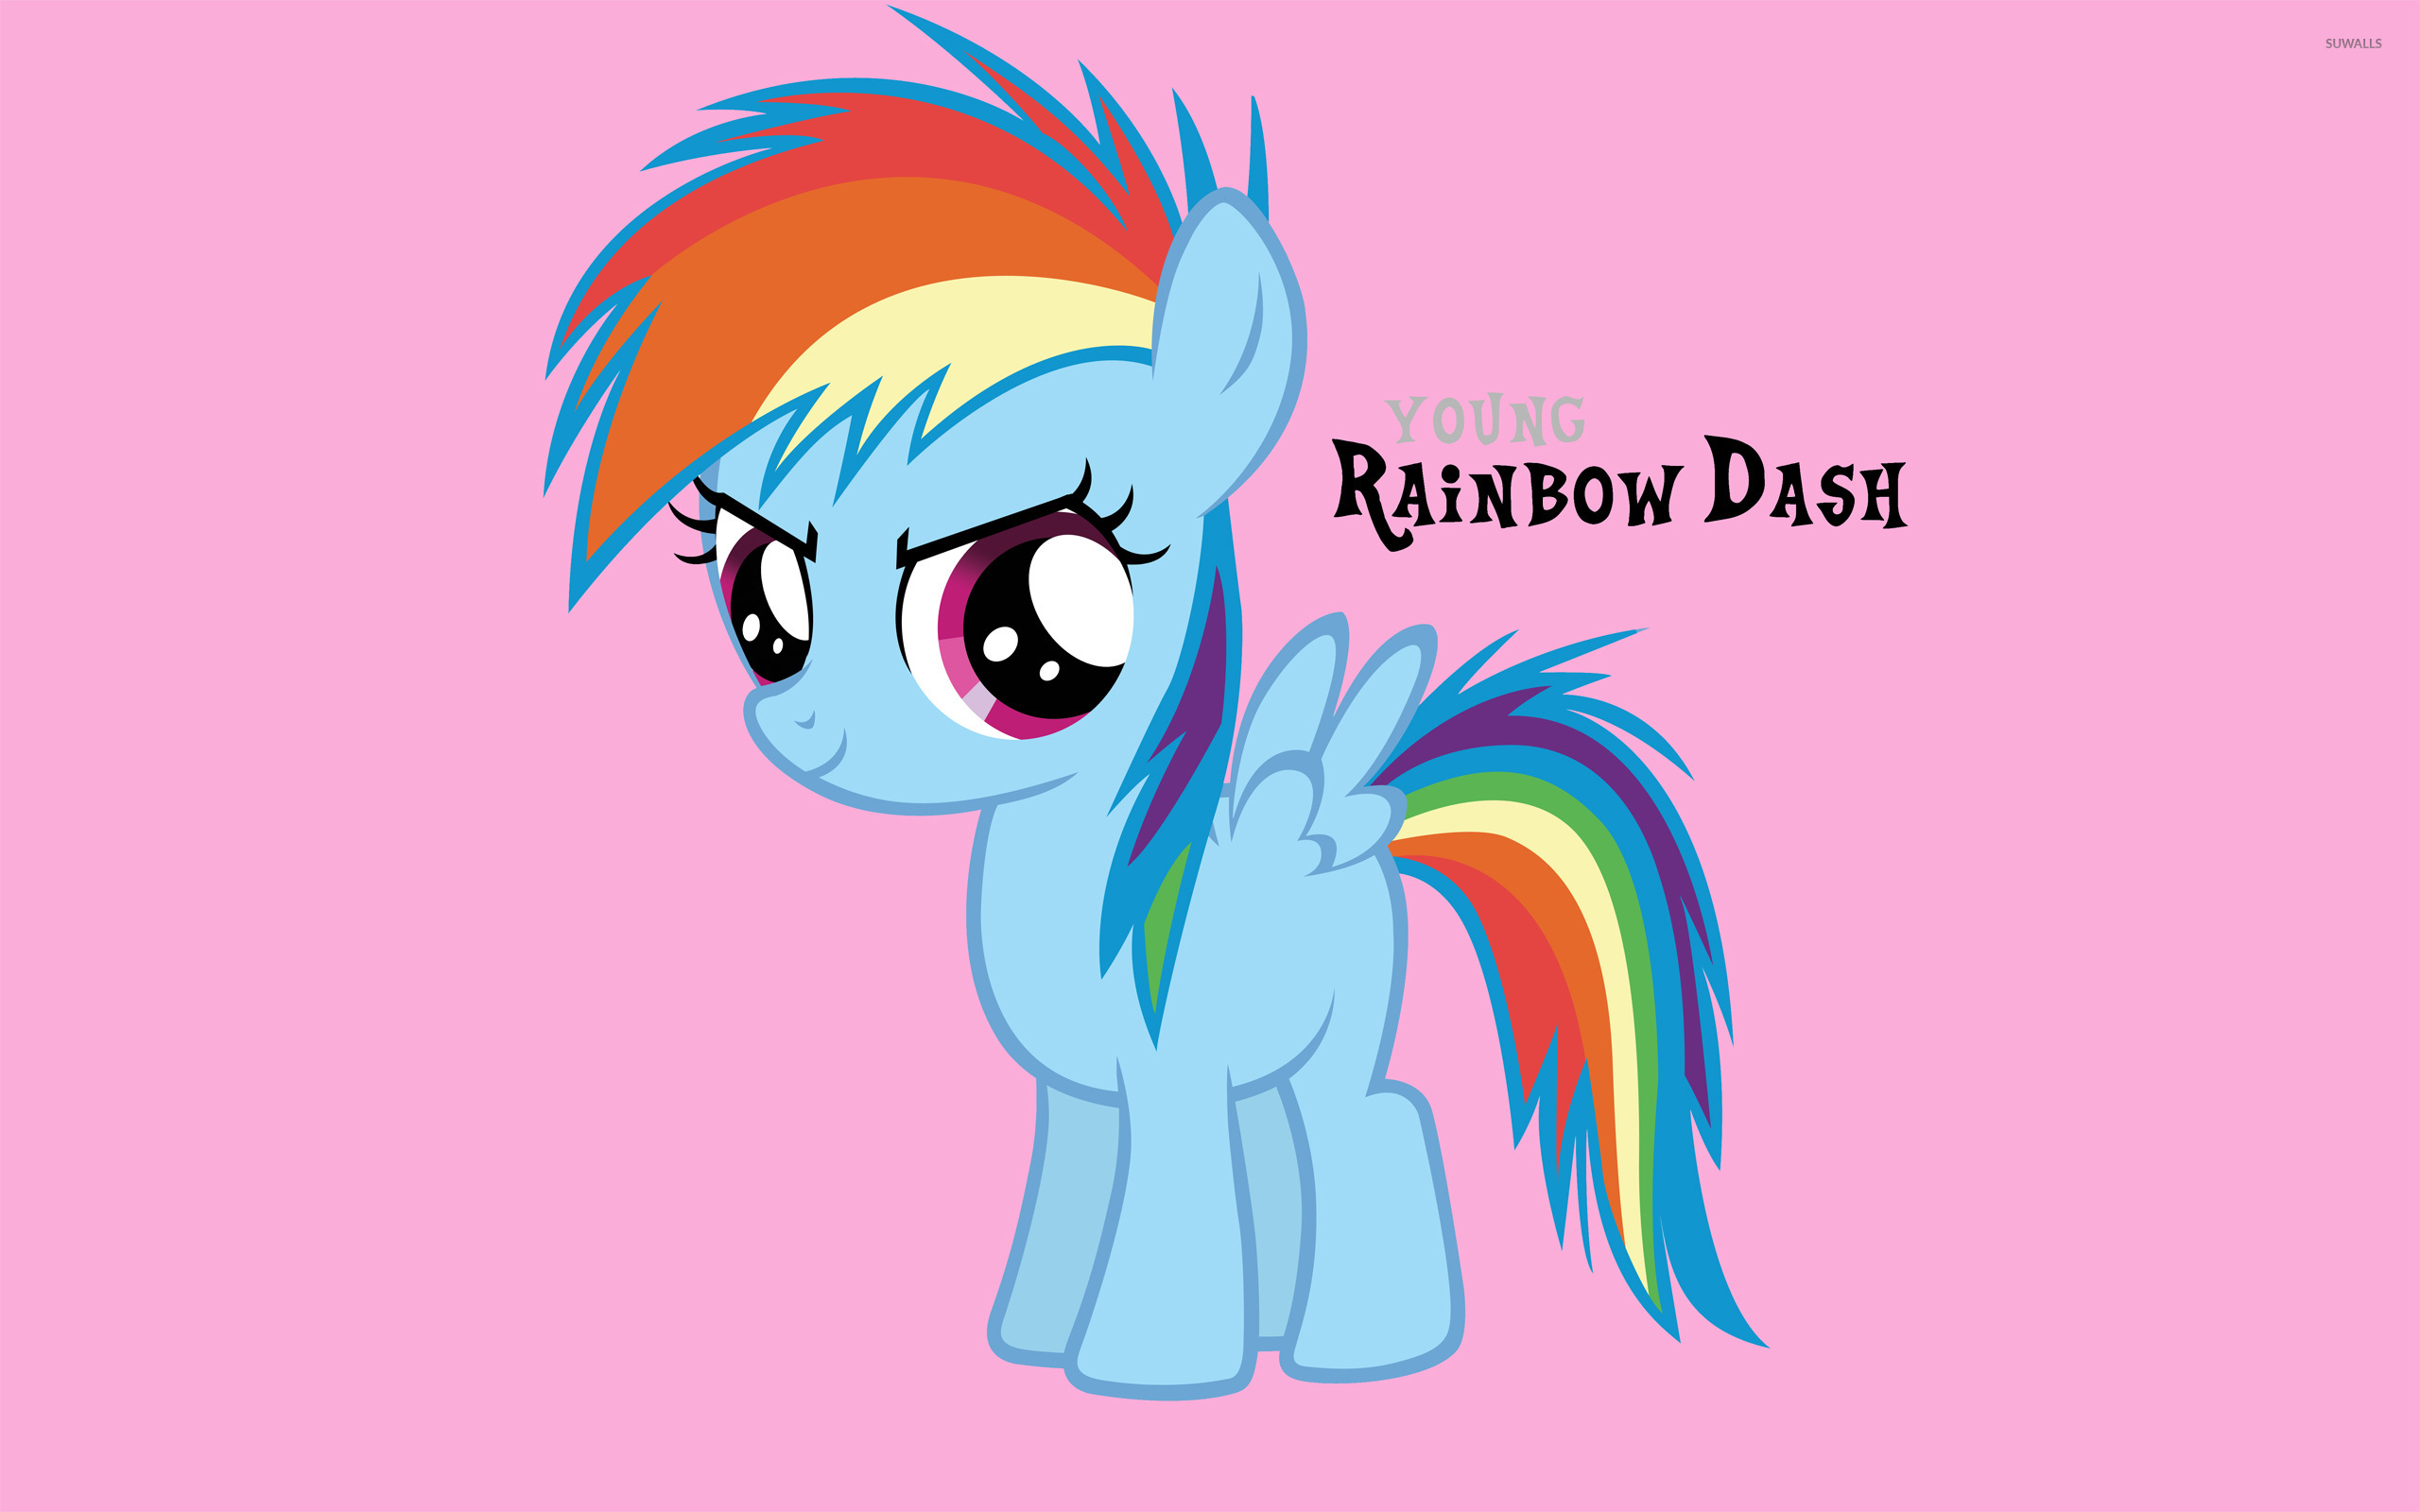 Young Rainbow Dash Wallpaper Cartoon